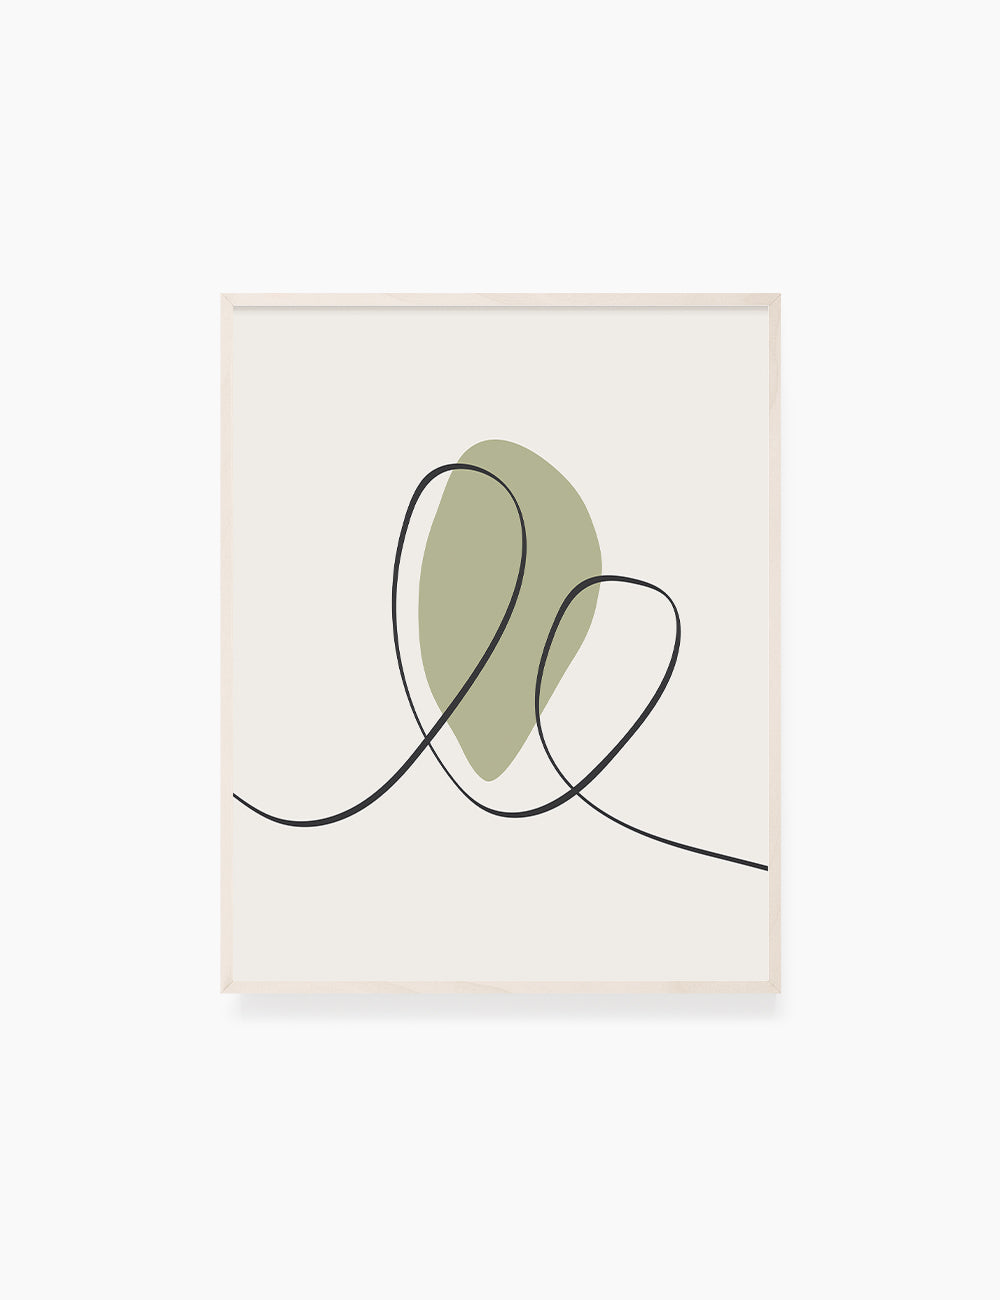 MINIMAL LINE ART. Abstract Heart Shape. Boho Aesthetic. Green. Beige. Black. Printable Wall Art Illustration. - PAPER MOON Art & Design